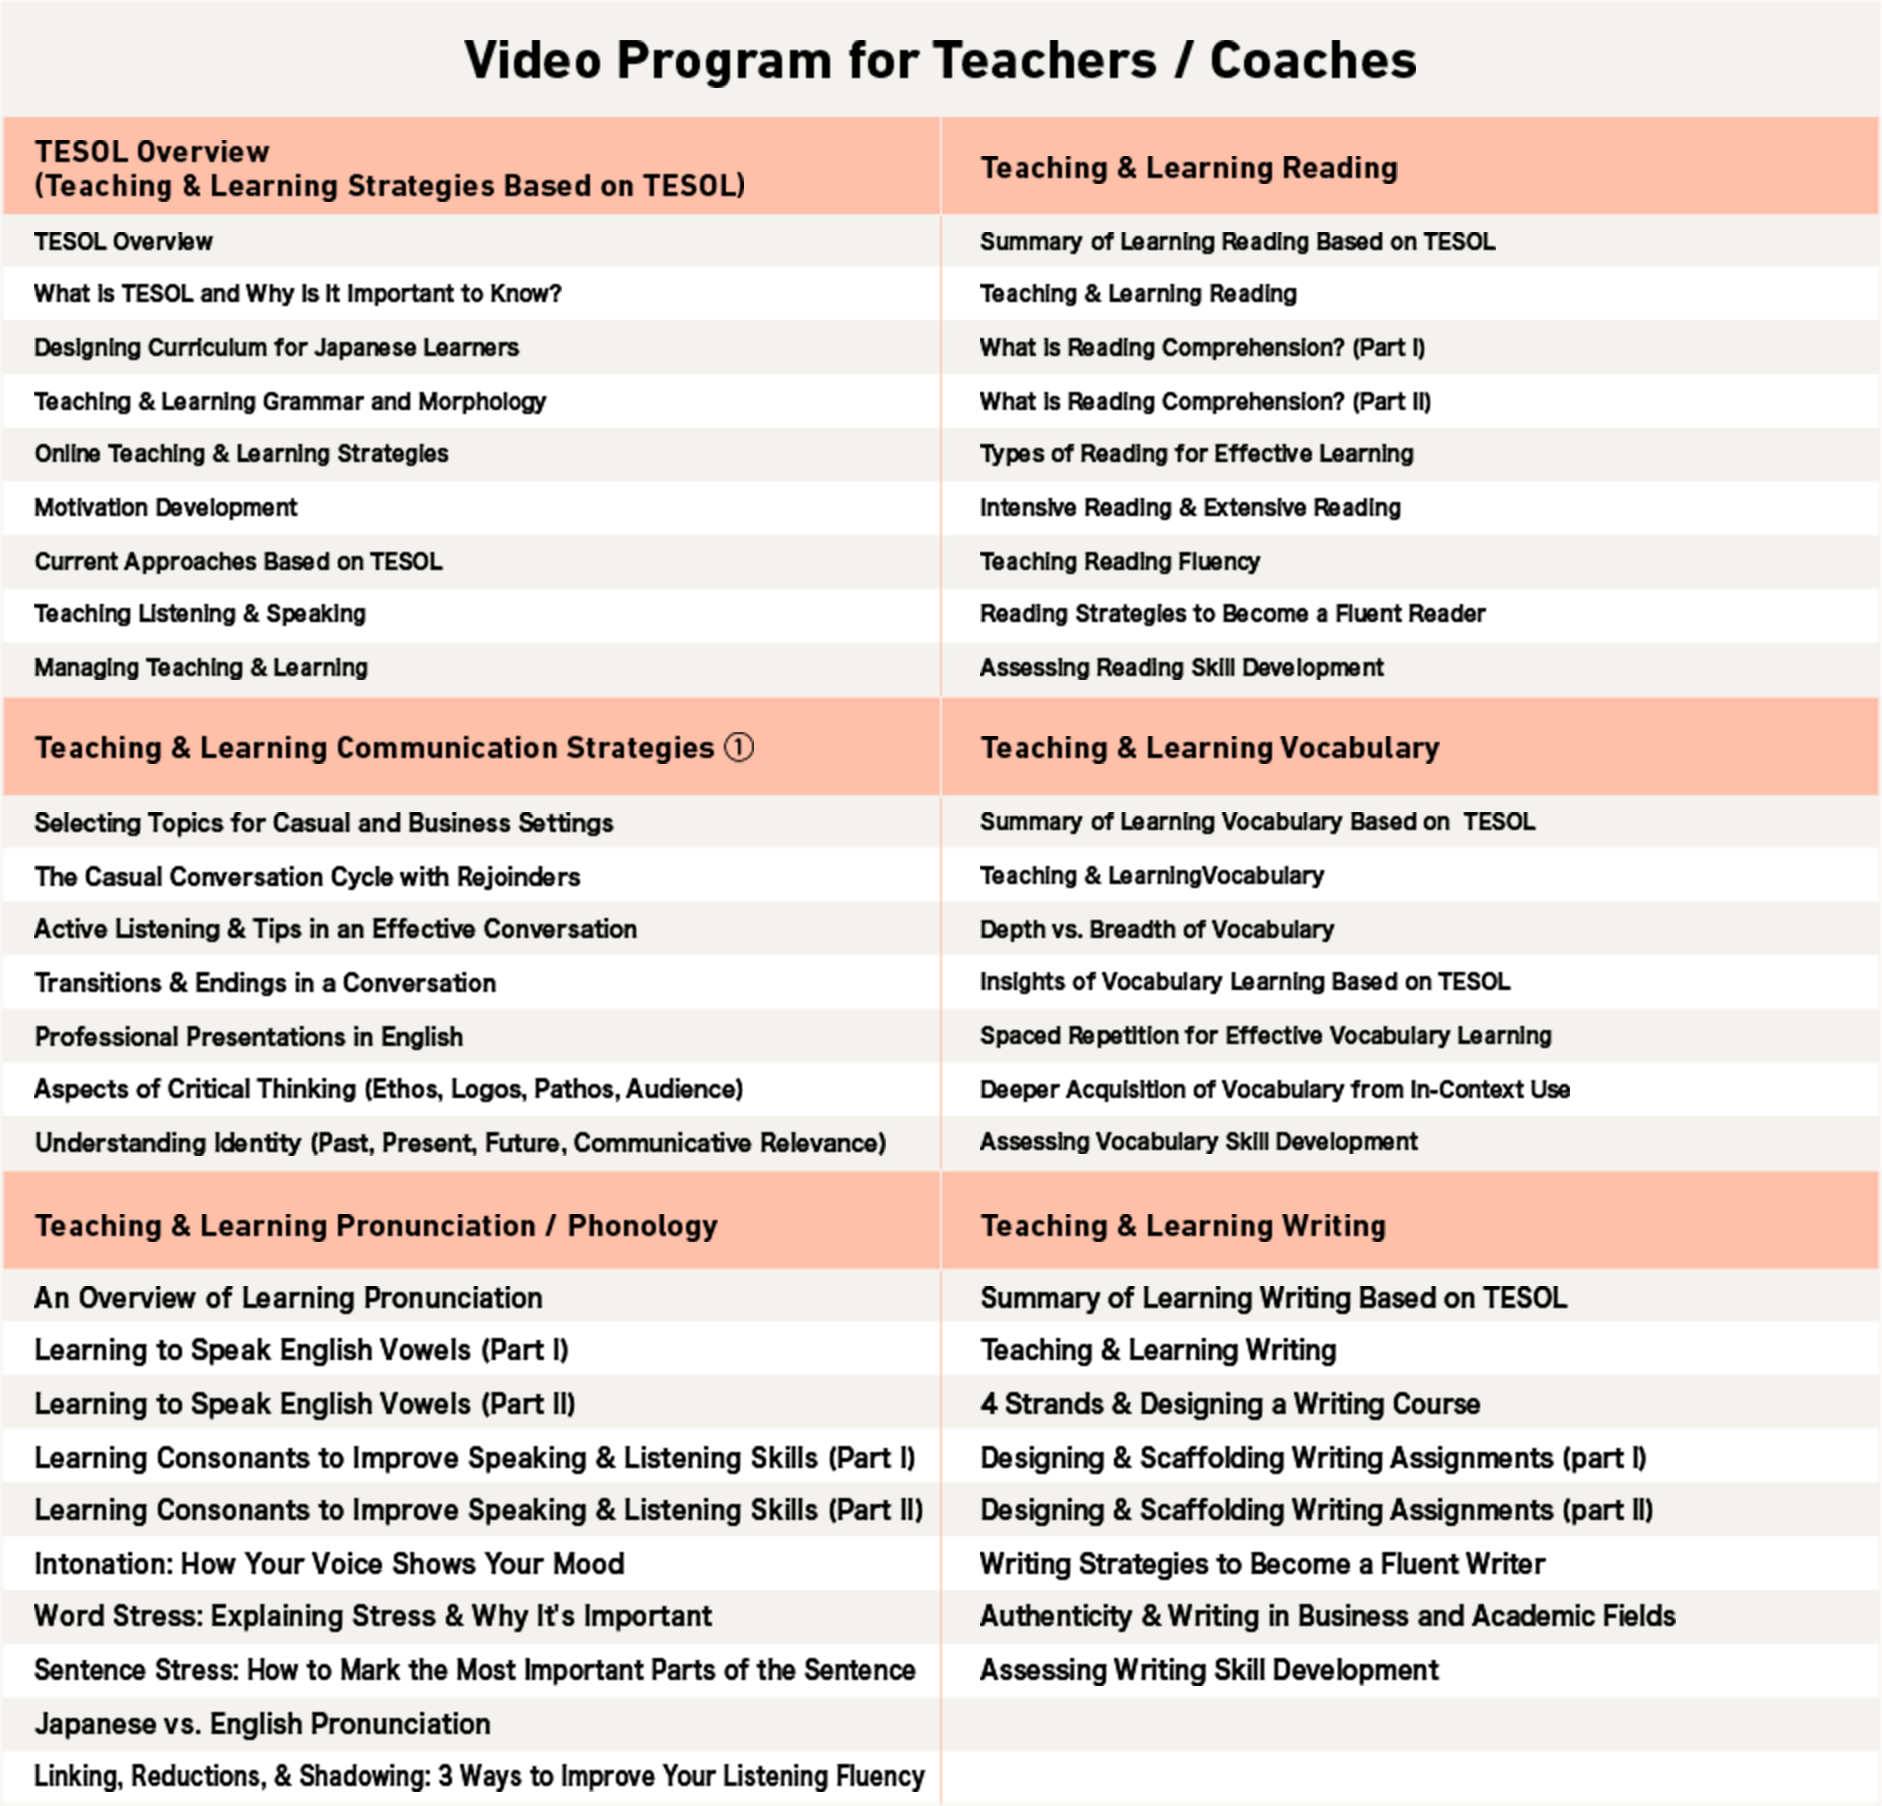 Video Program for Teachers / Coaches のリスト